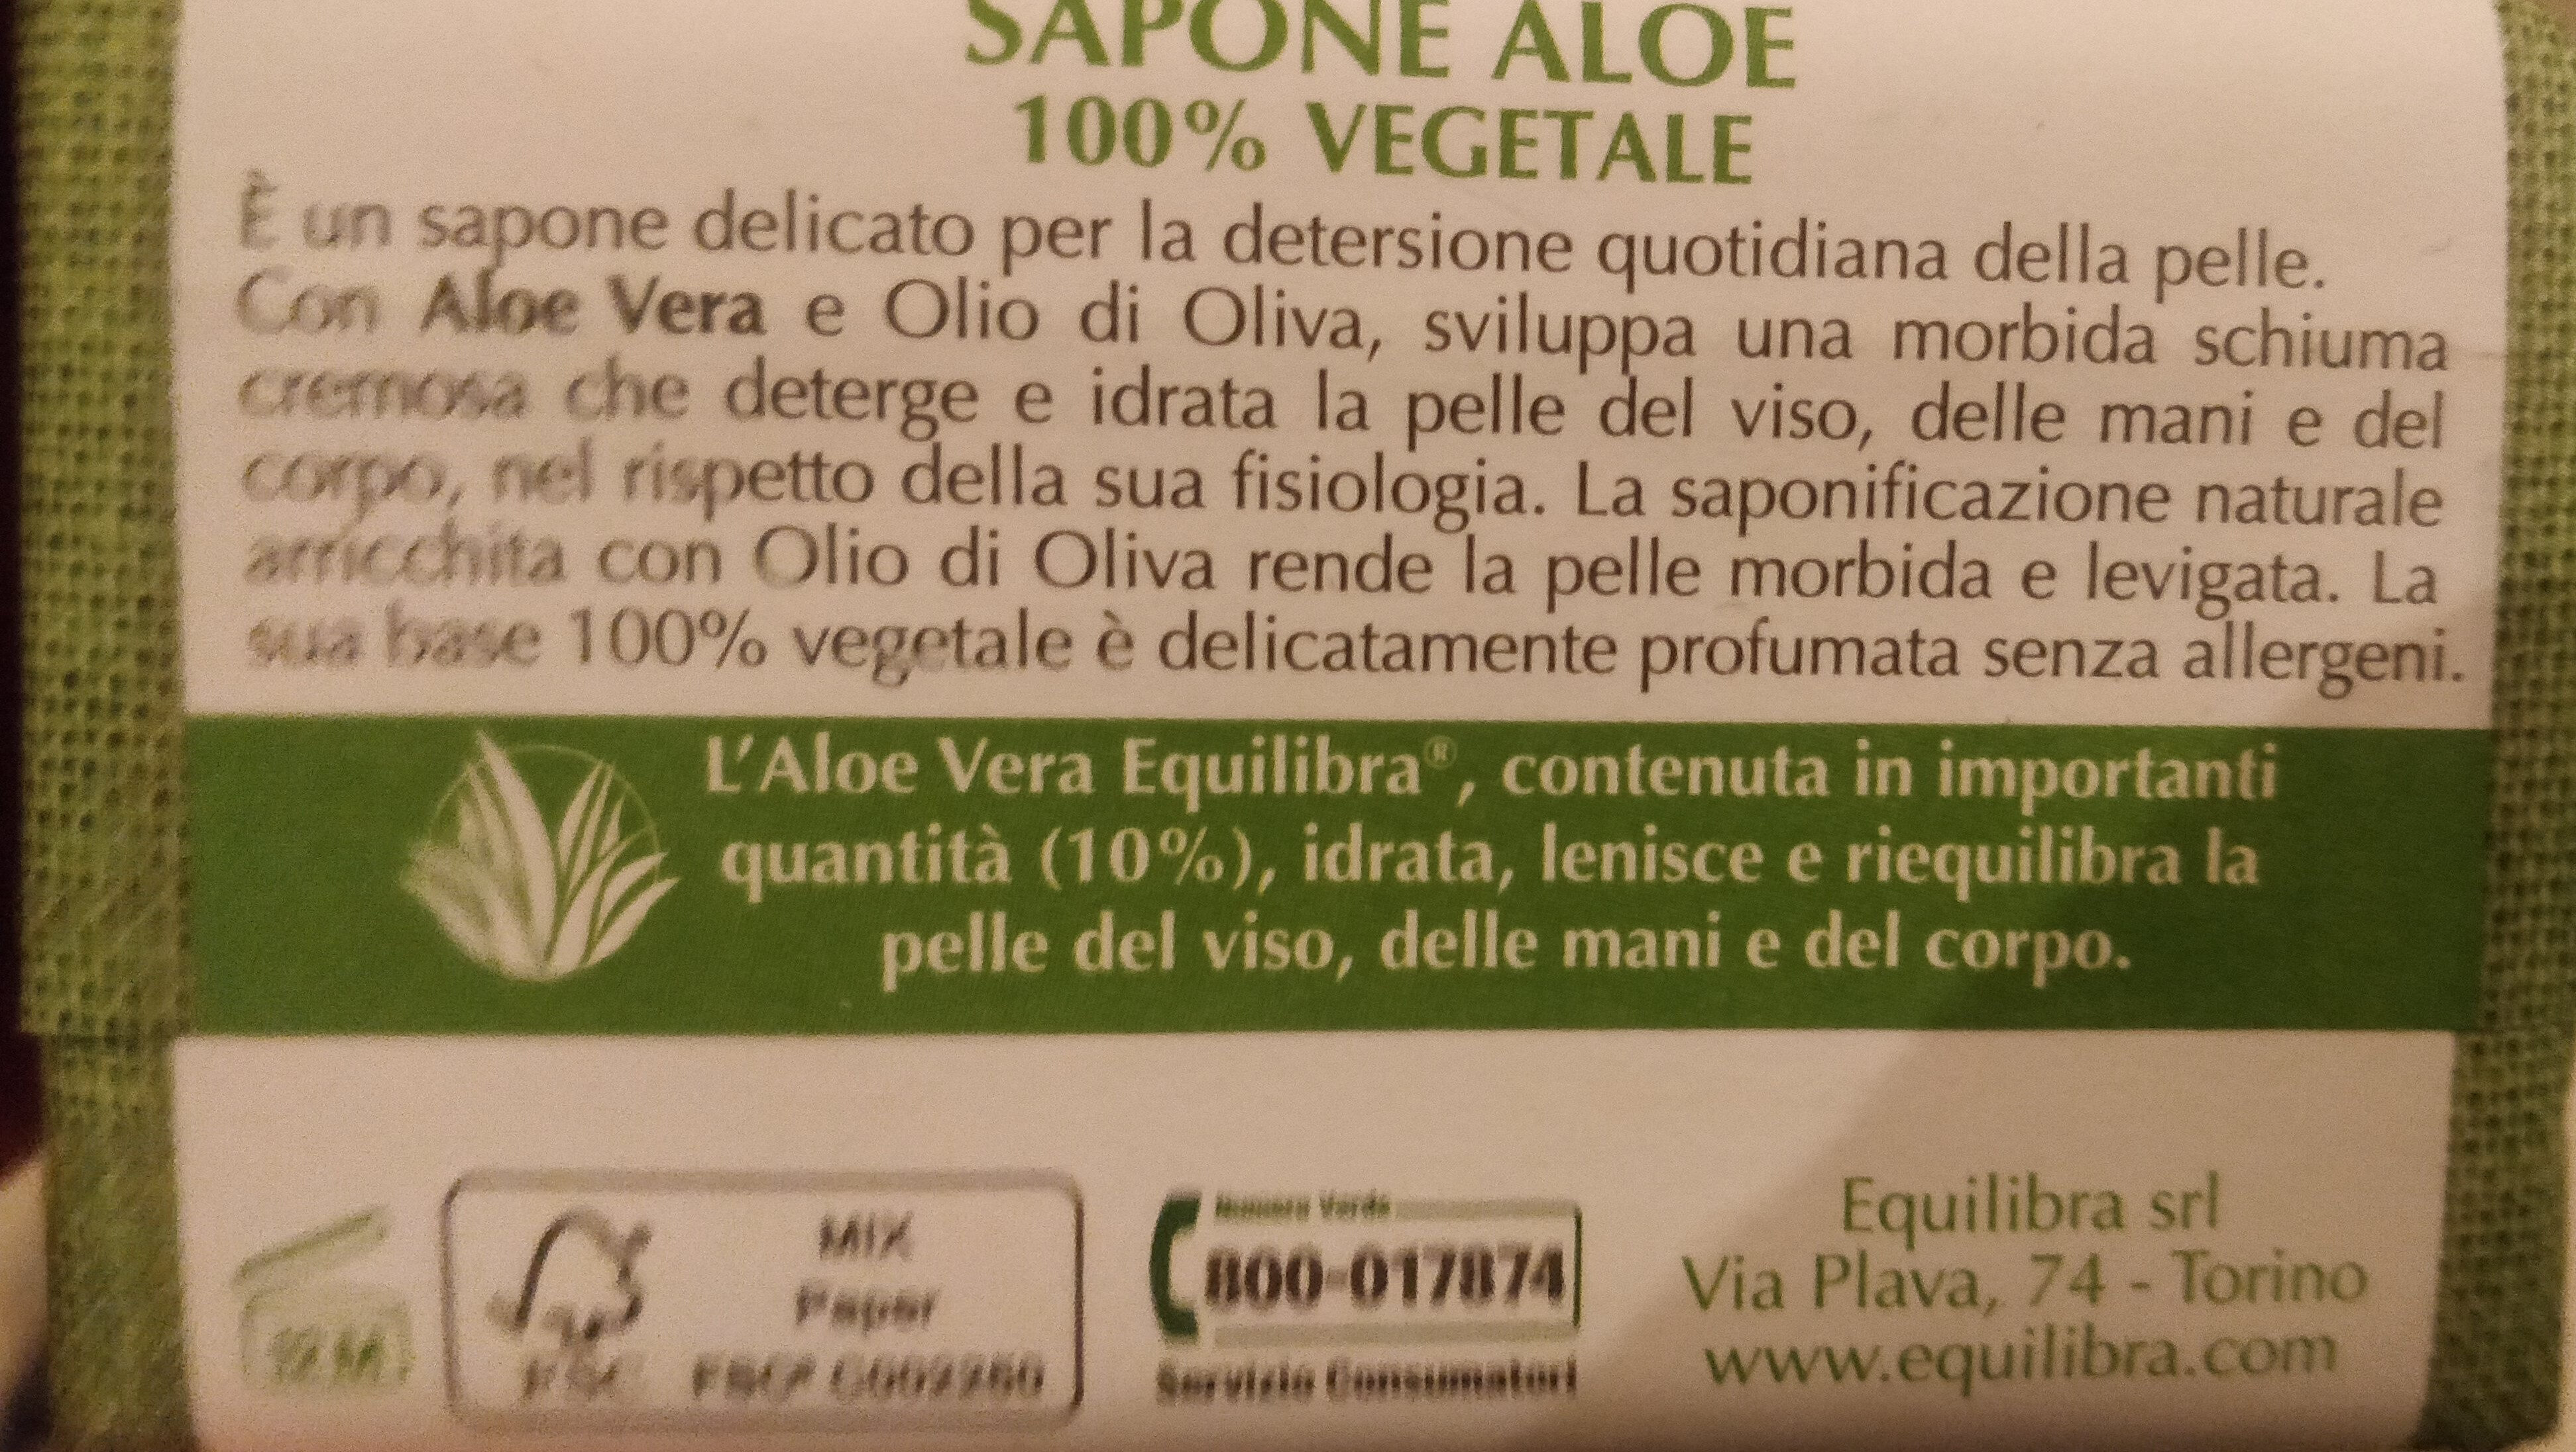 Aloe, detersione naturale - sapone 100% vegetale - Product - en